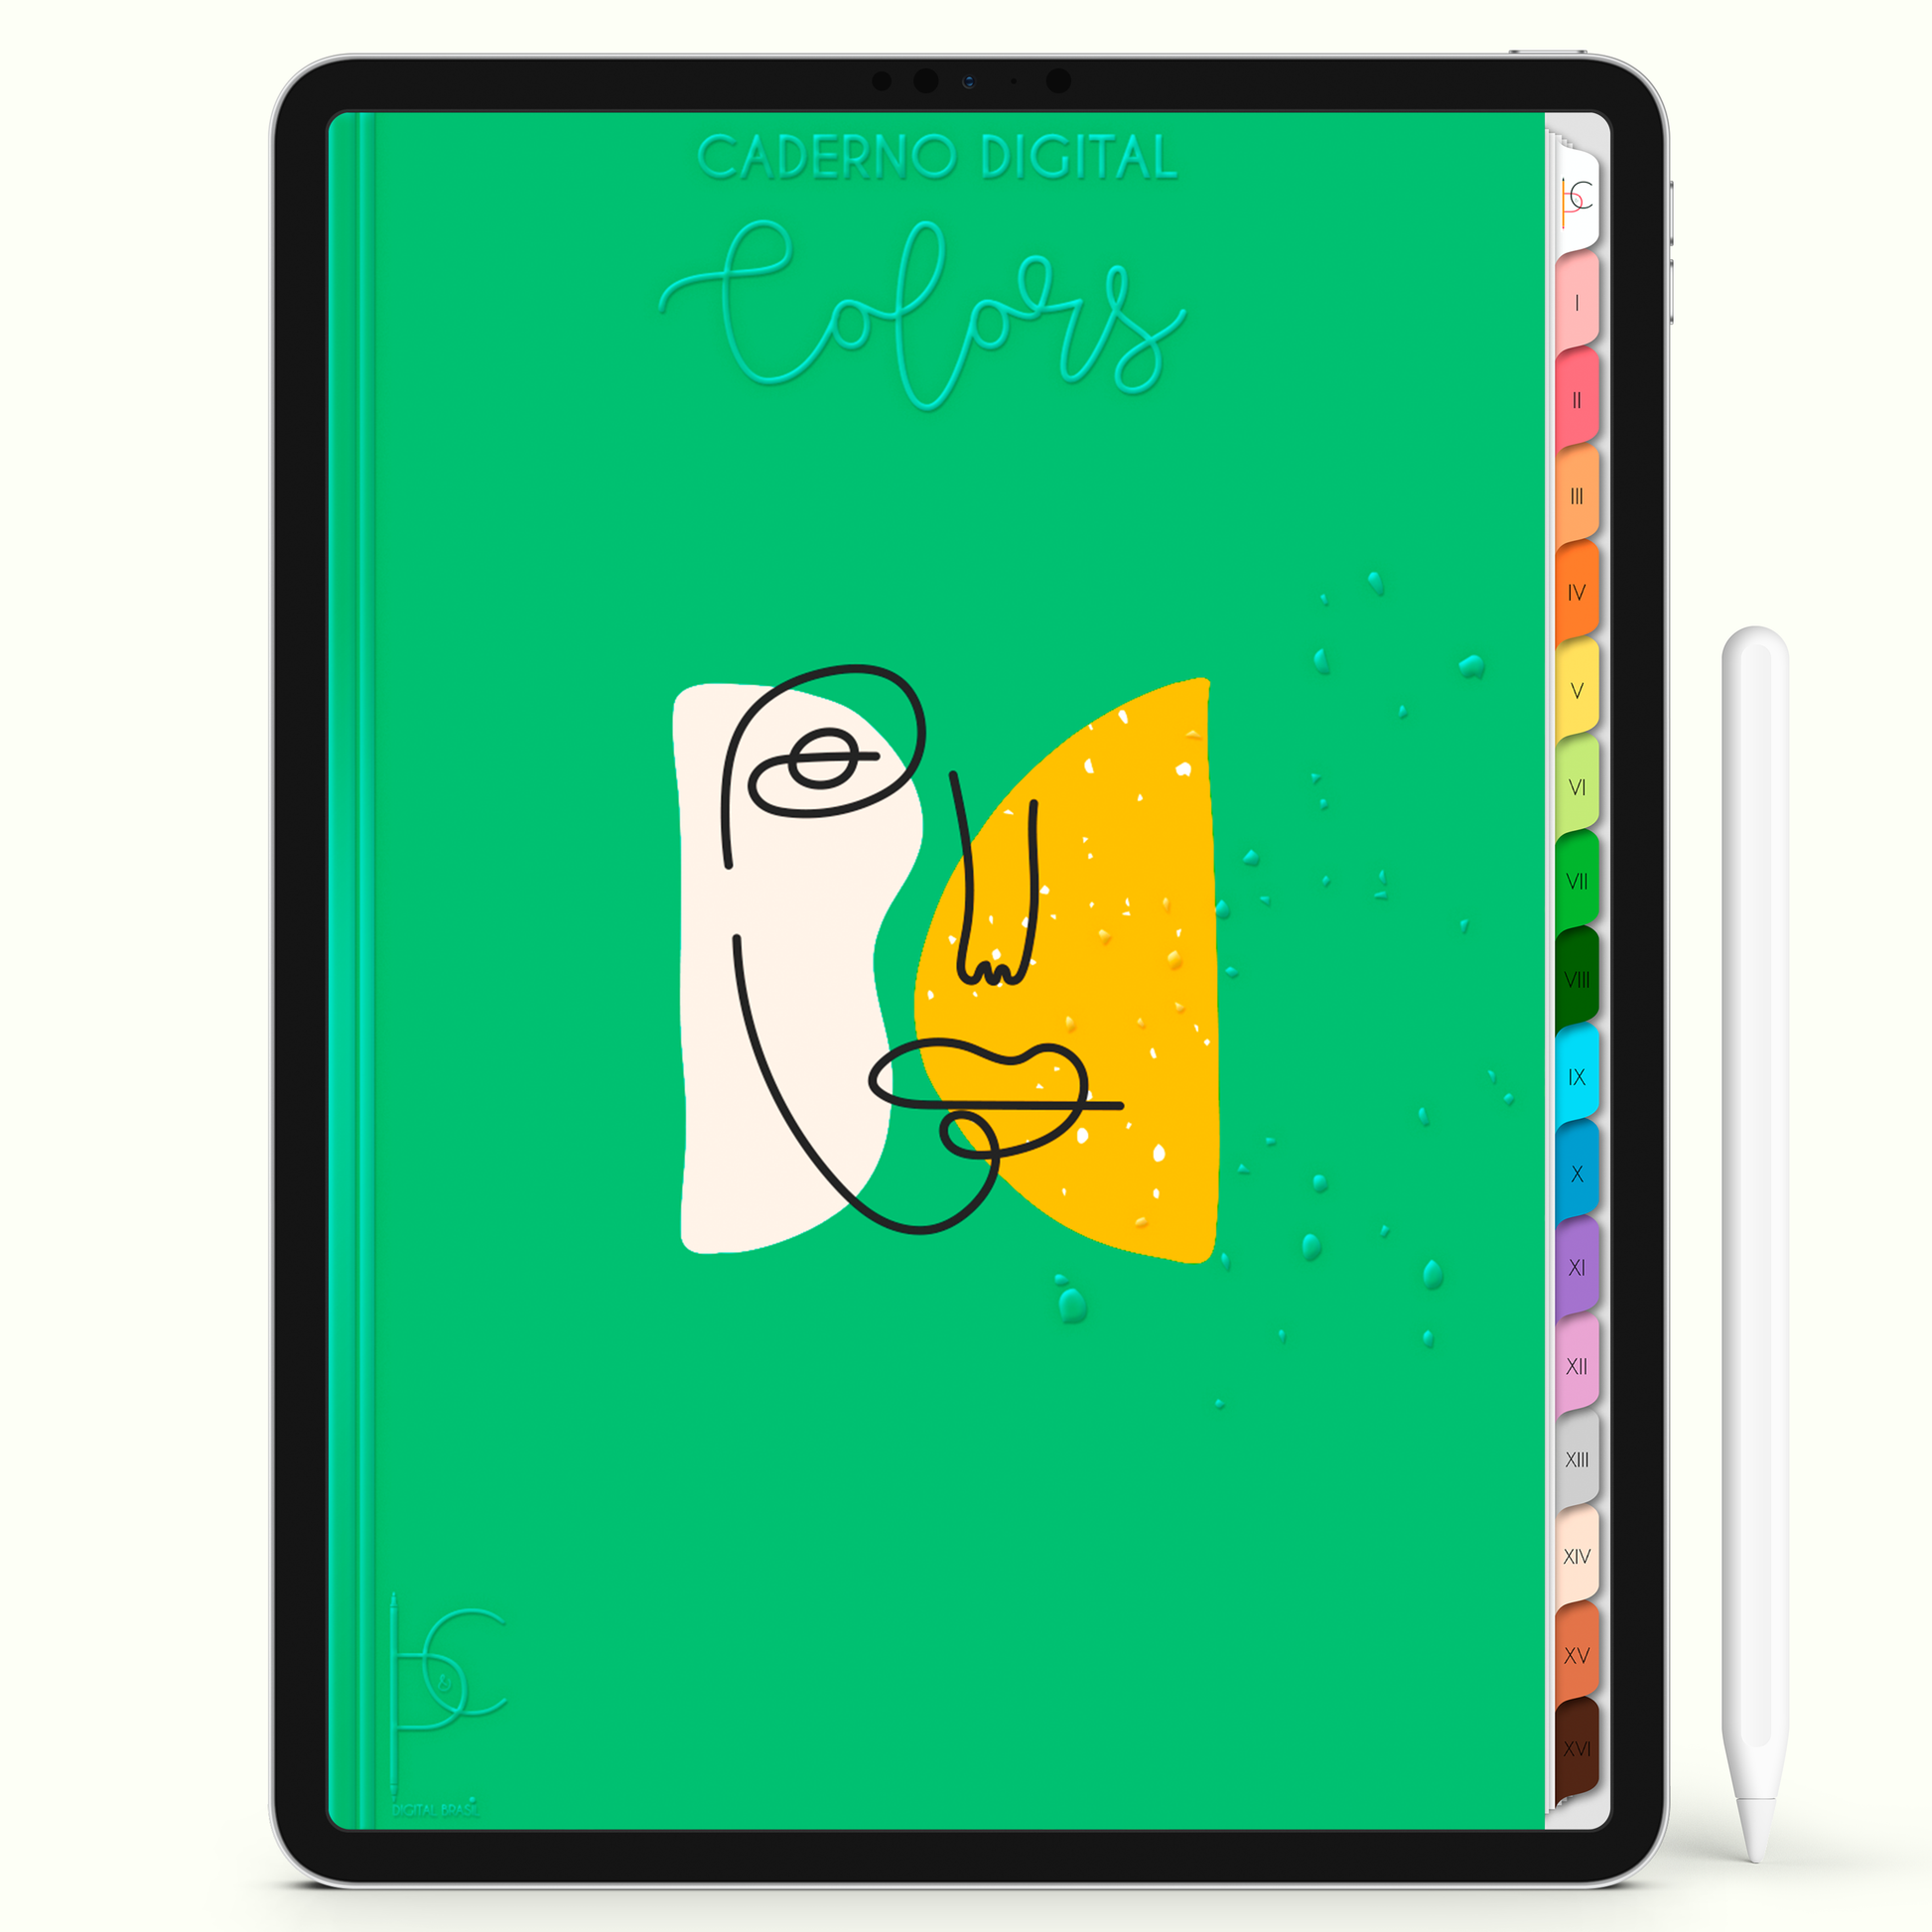 Caderno Digital Colors Shapes Studies 16 Matérias • Para iPad e Tablet Android • Download instantâneo • Sustentável